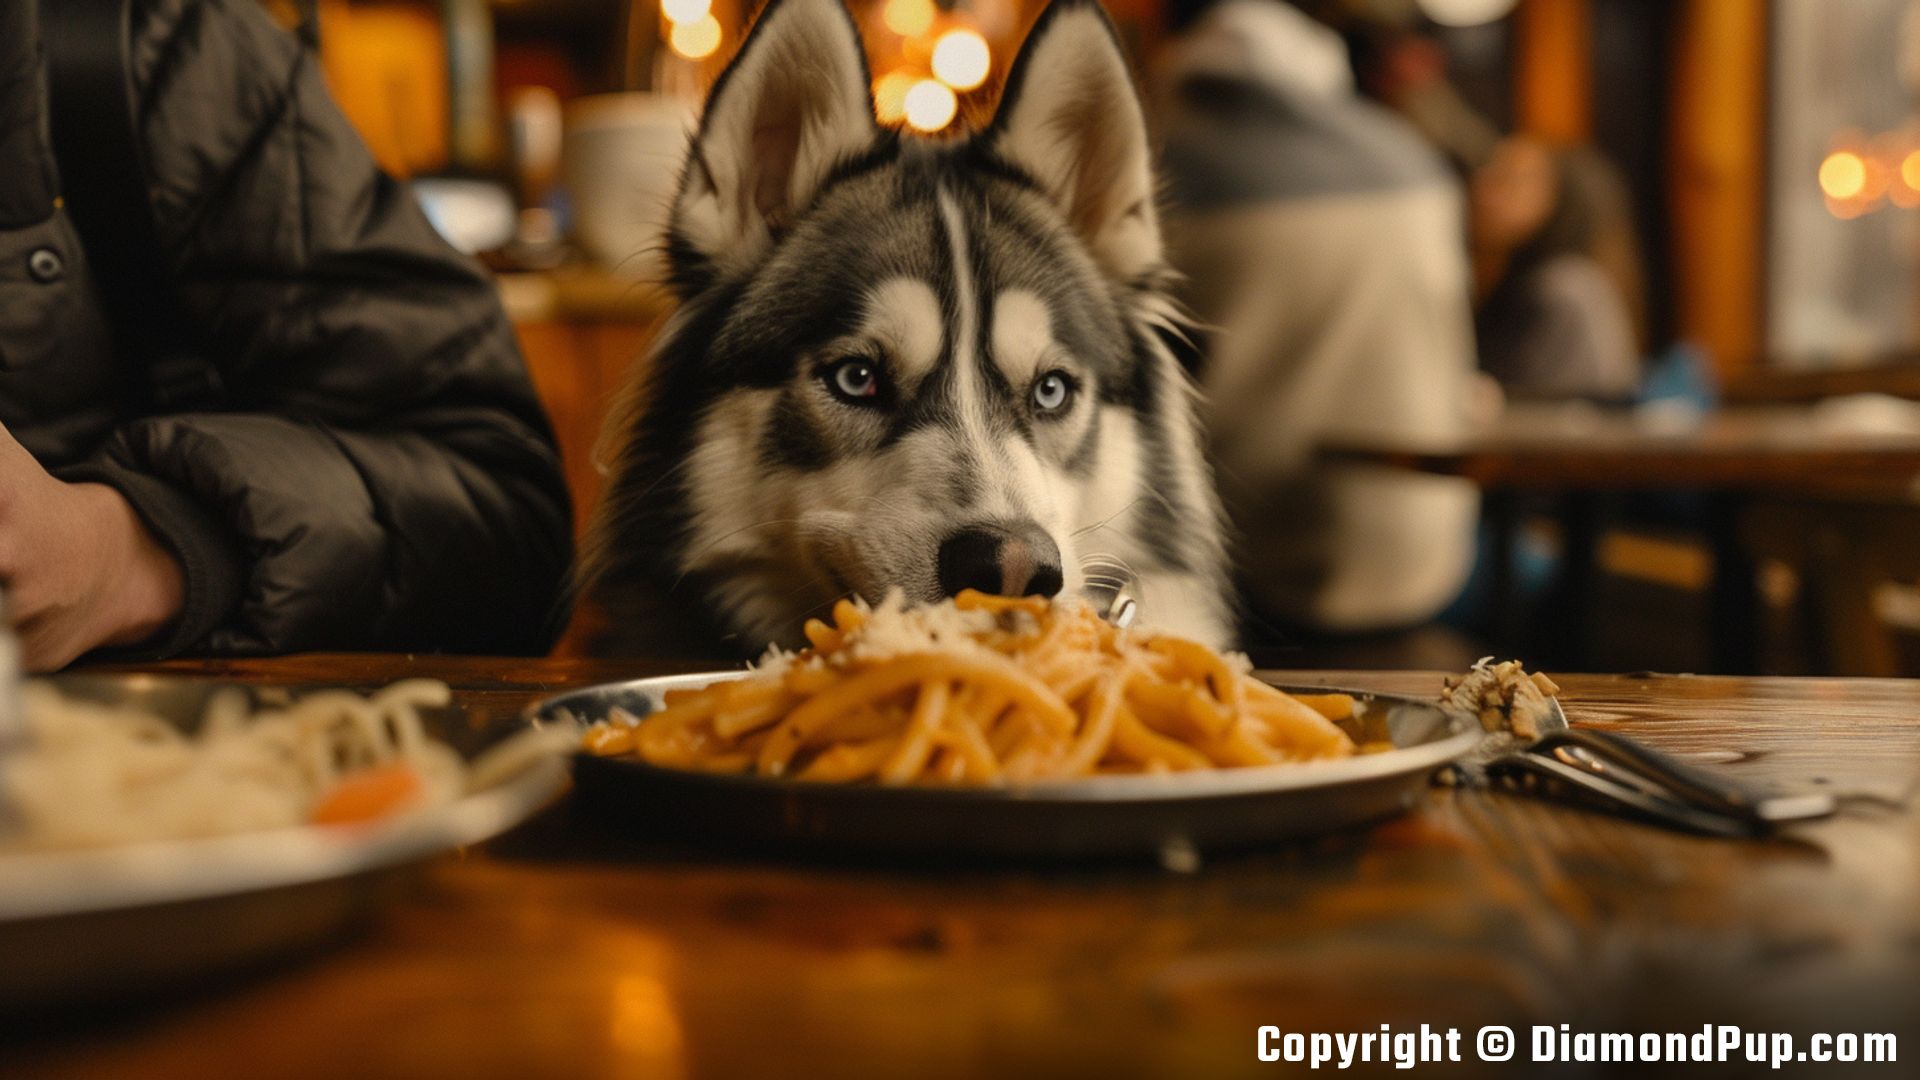 Image of an Adorable Husky Eating Pasta